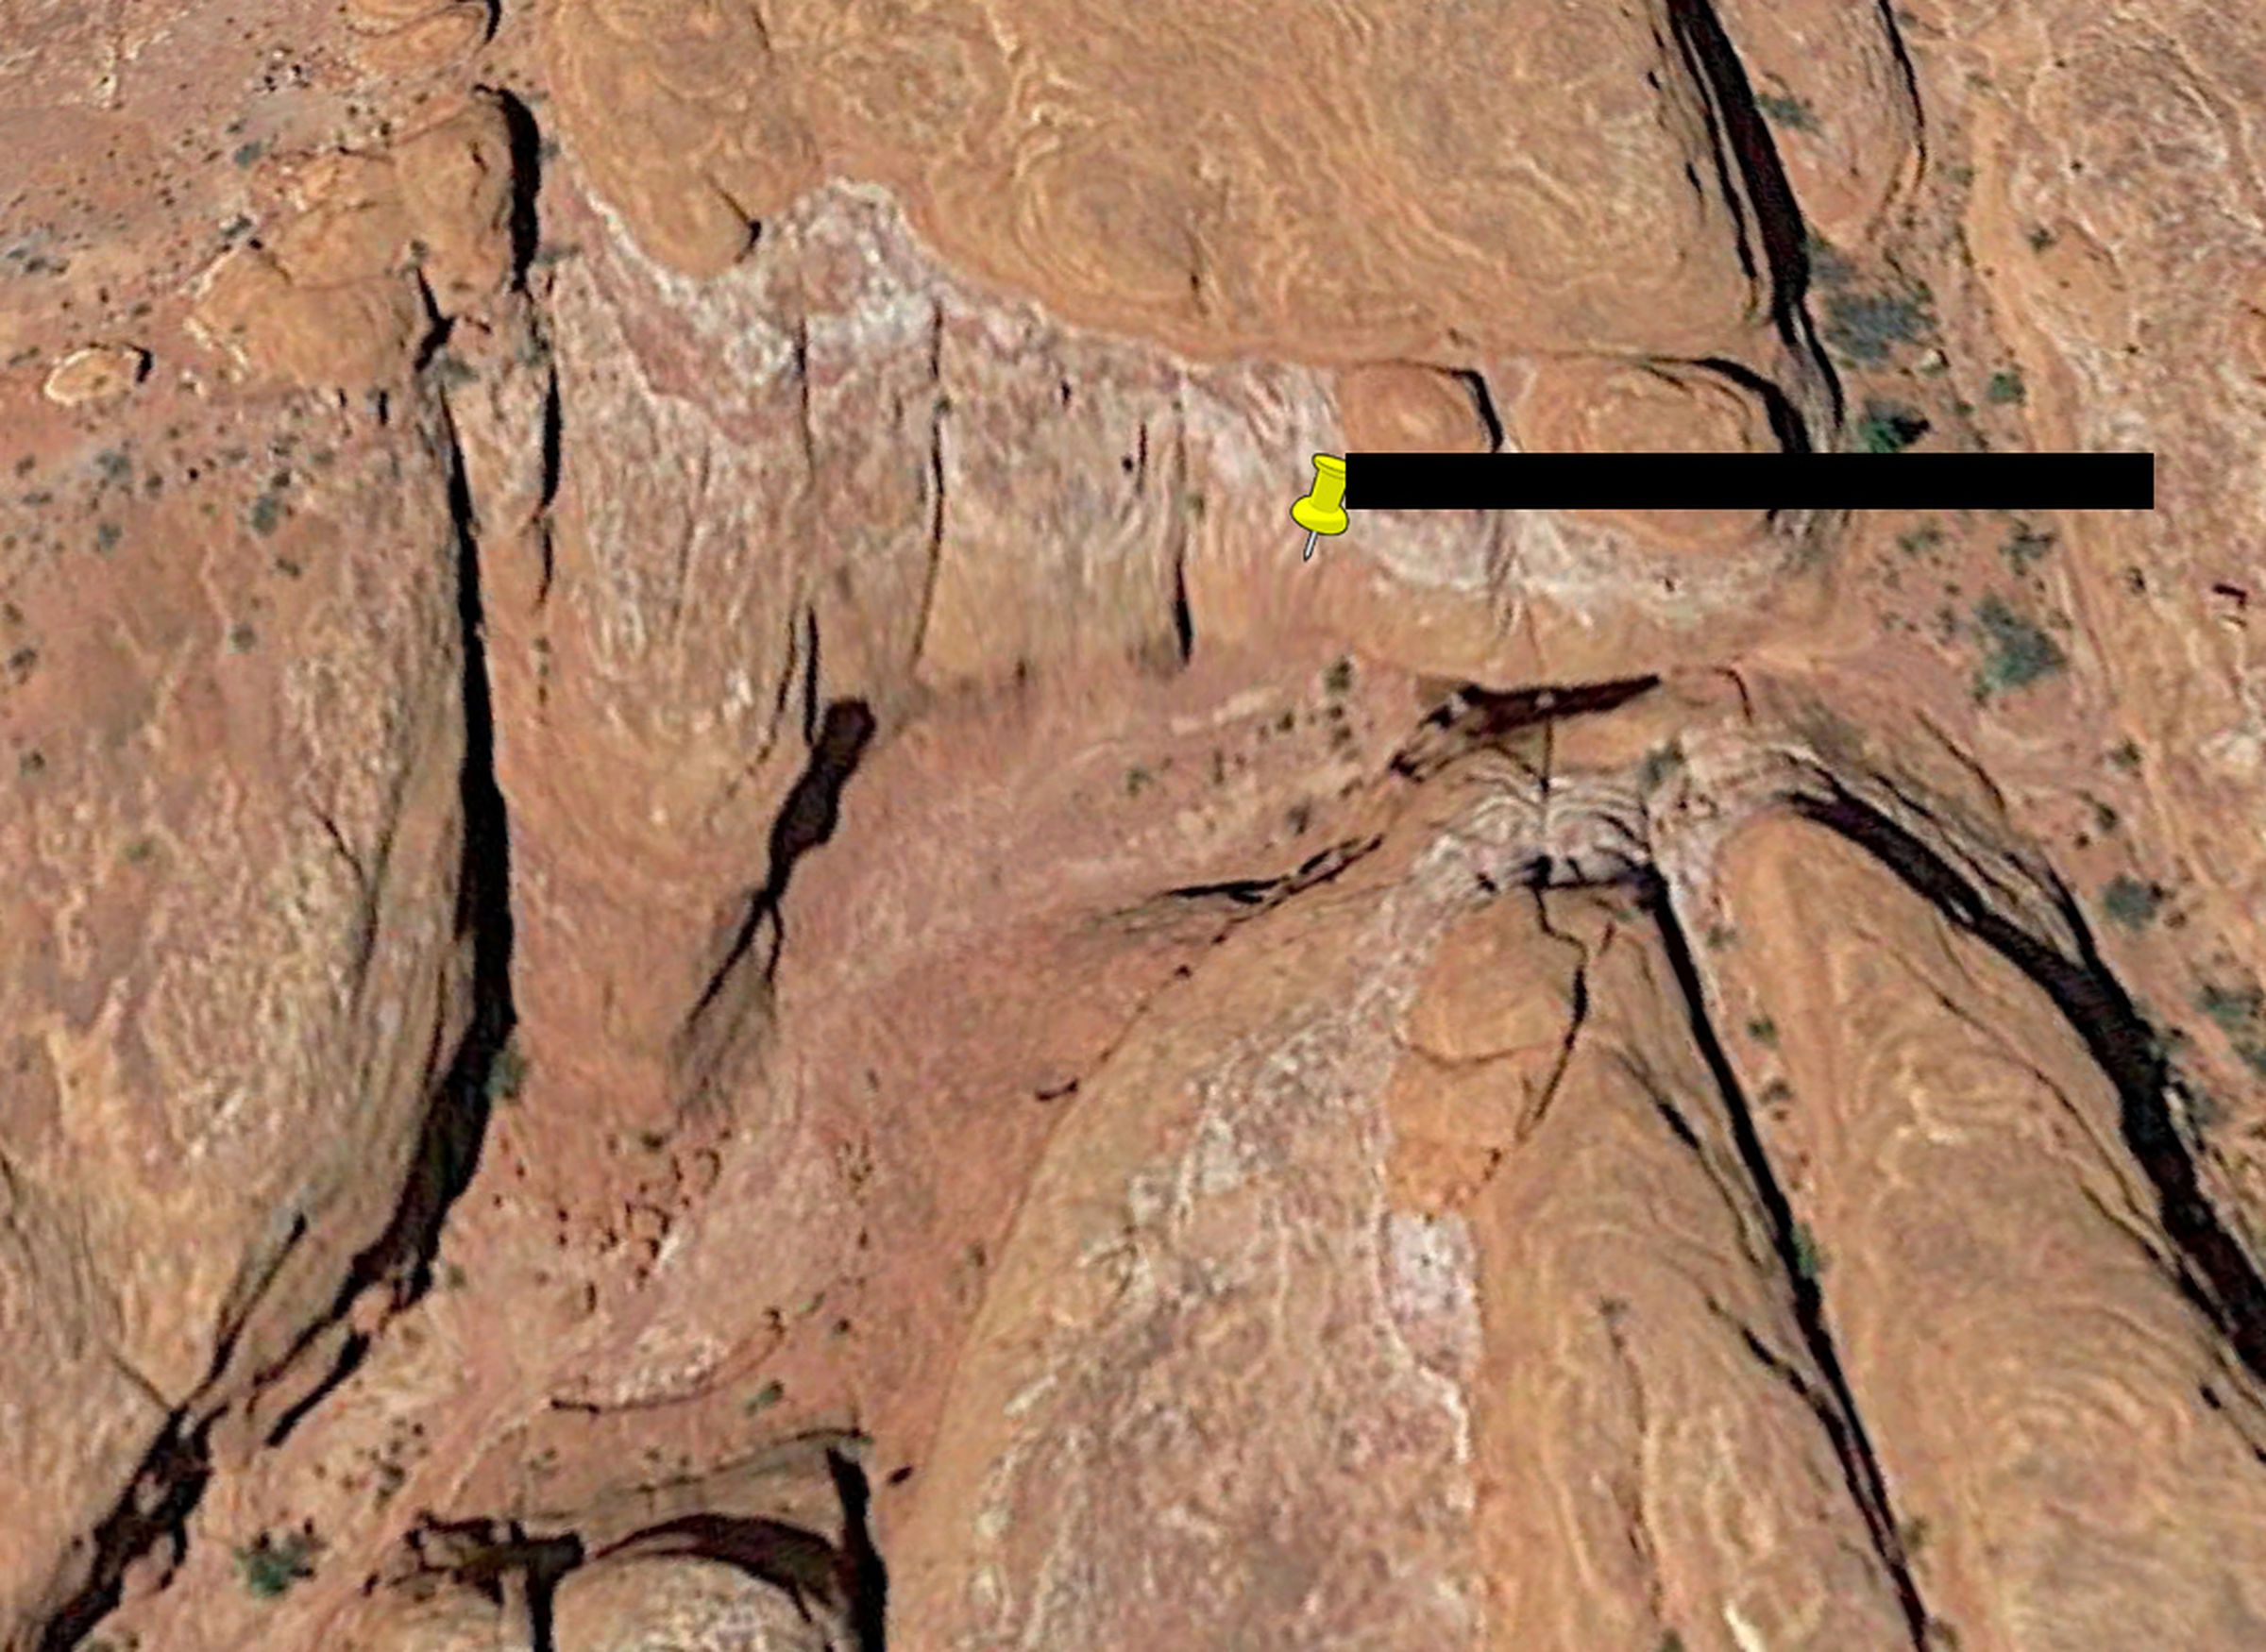 Possible Utah monolith site, August 2015